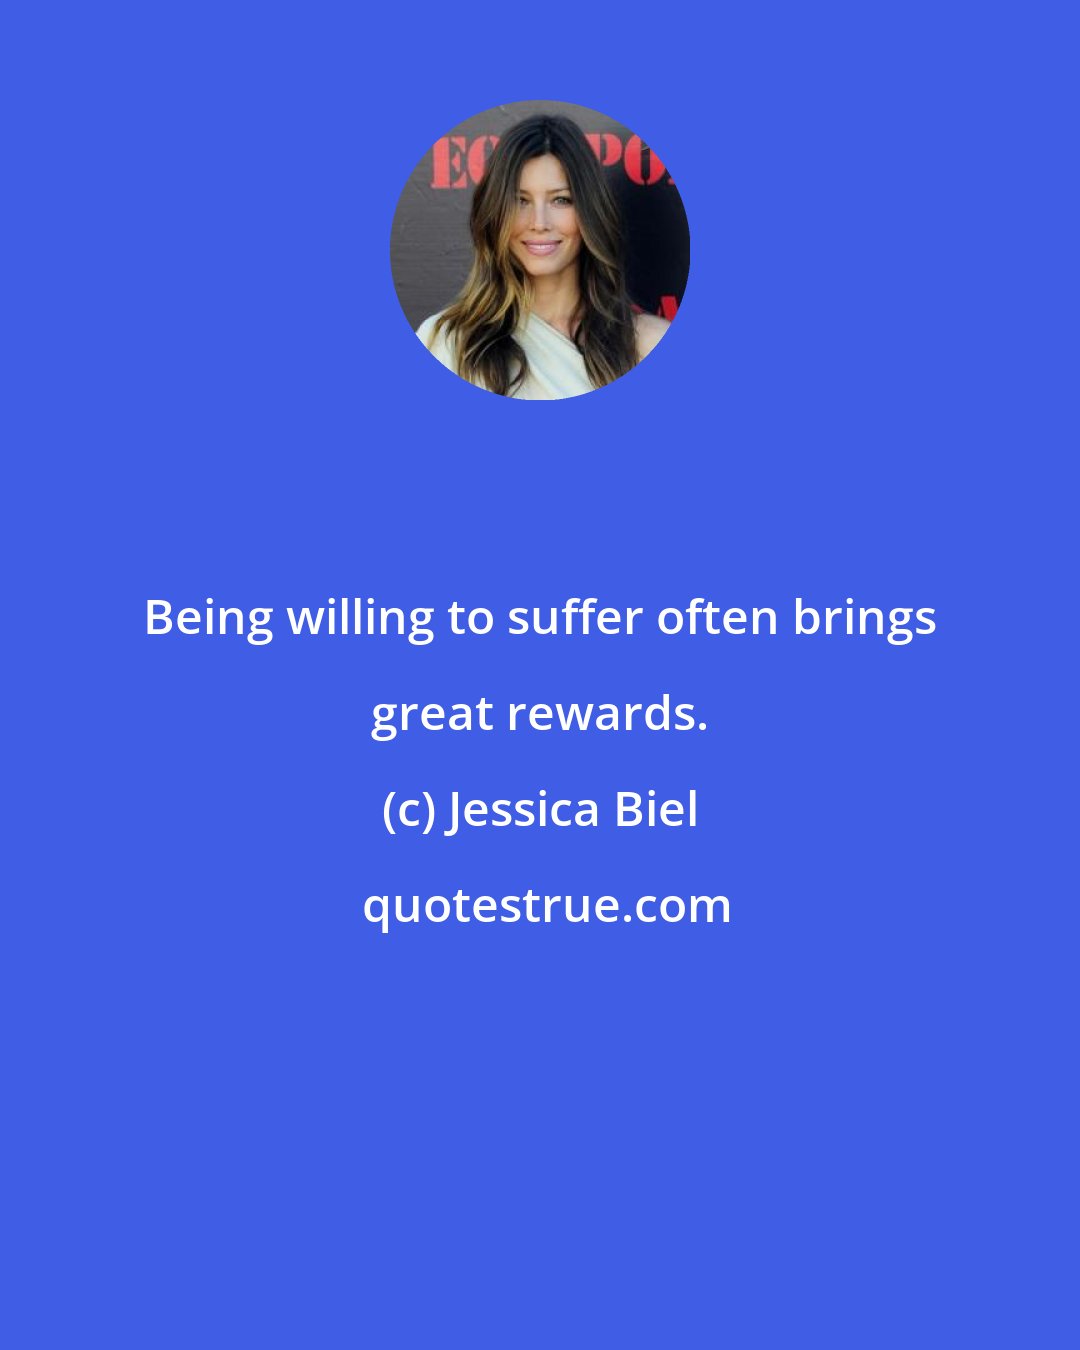 Jessica Biel: Being willing to suffer often brings great rewards.